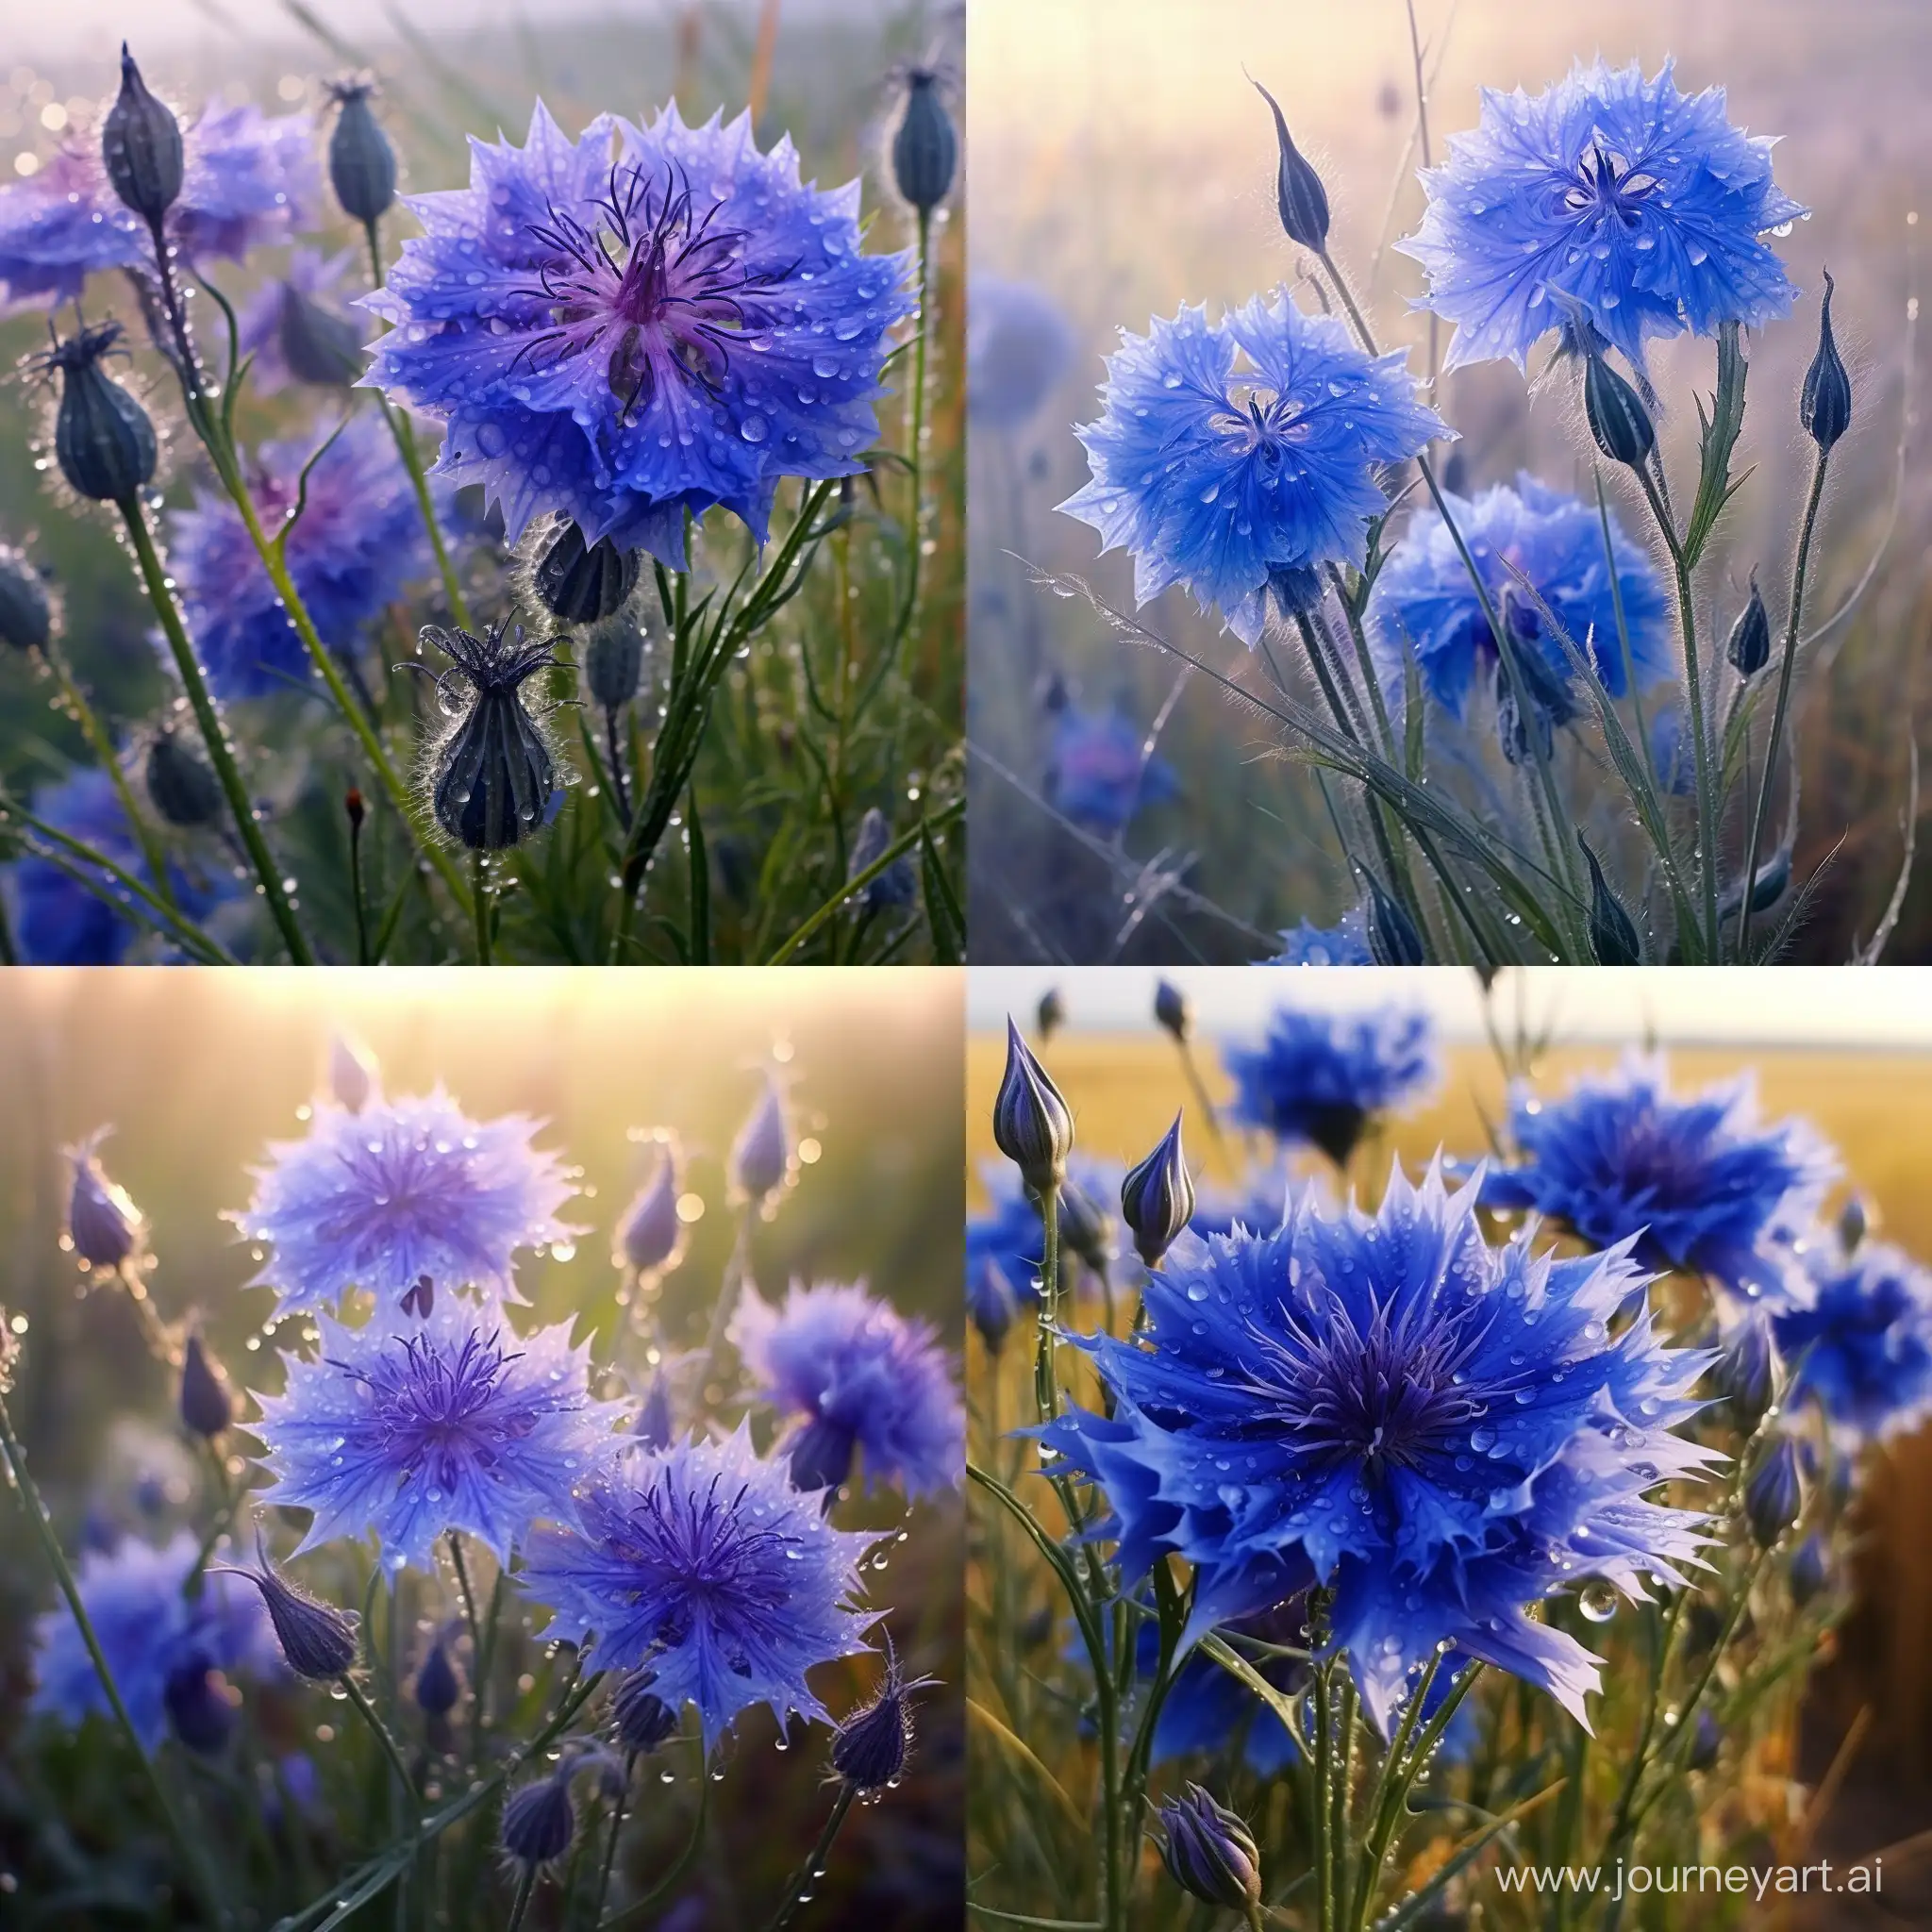 Morning-Dew-Cornflowers-Serene-Fieldscape-with-Vibrant-Blue-Blooms